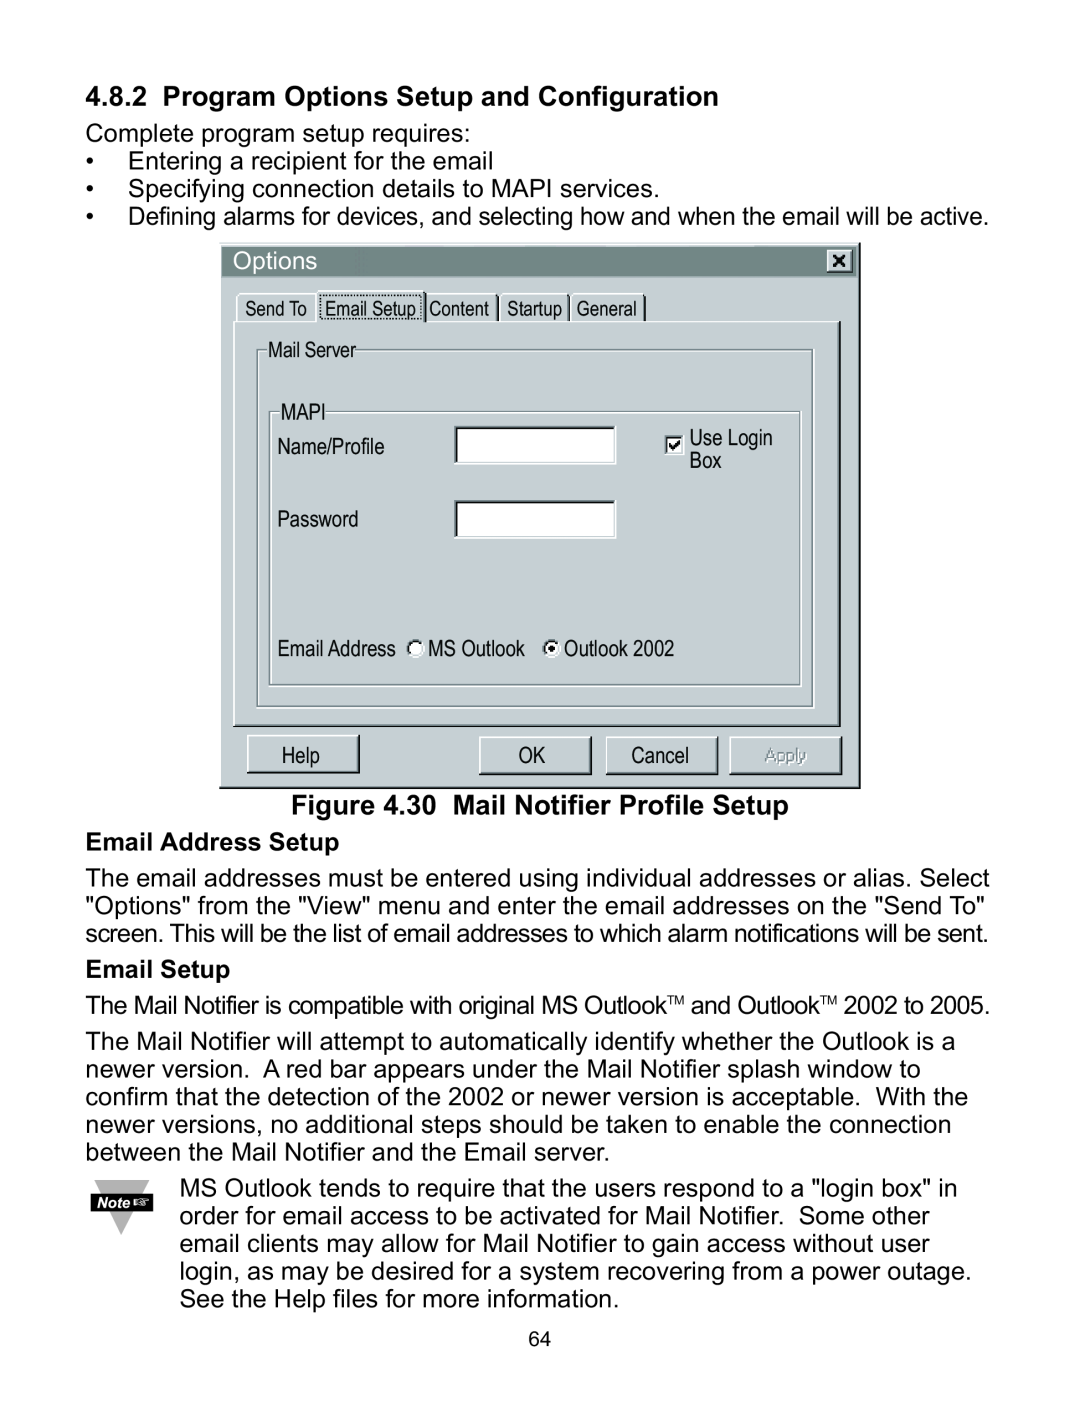 Omega WI8XX-U manual 30 Mail Notifier Profile Setup, Email Address Setup, Email Setup 